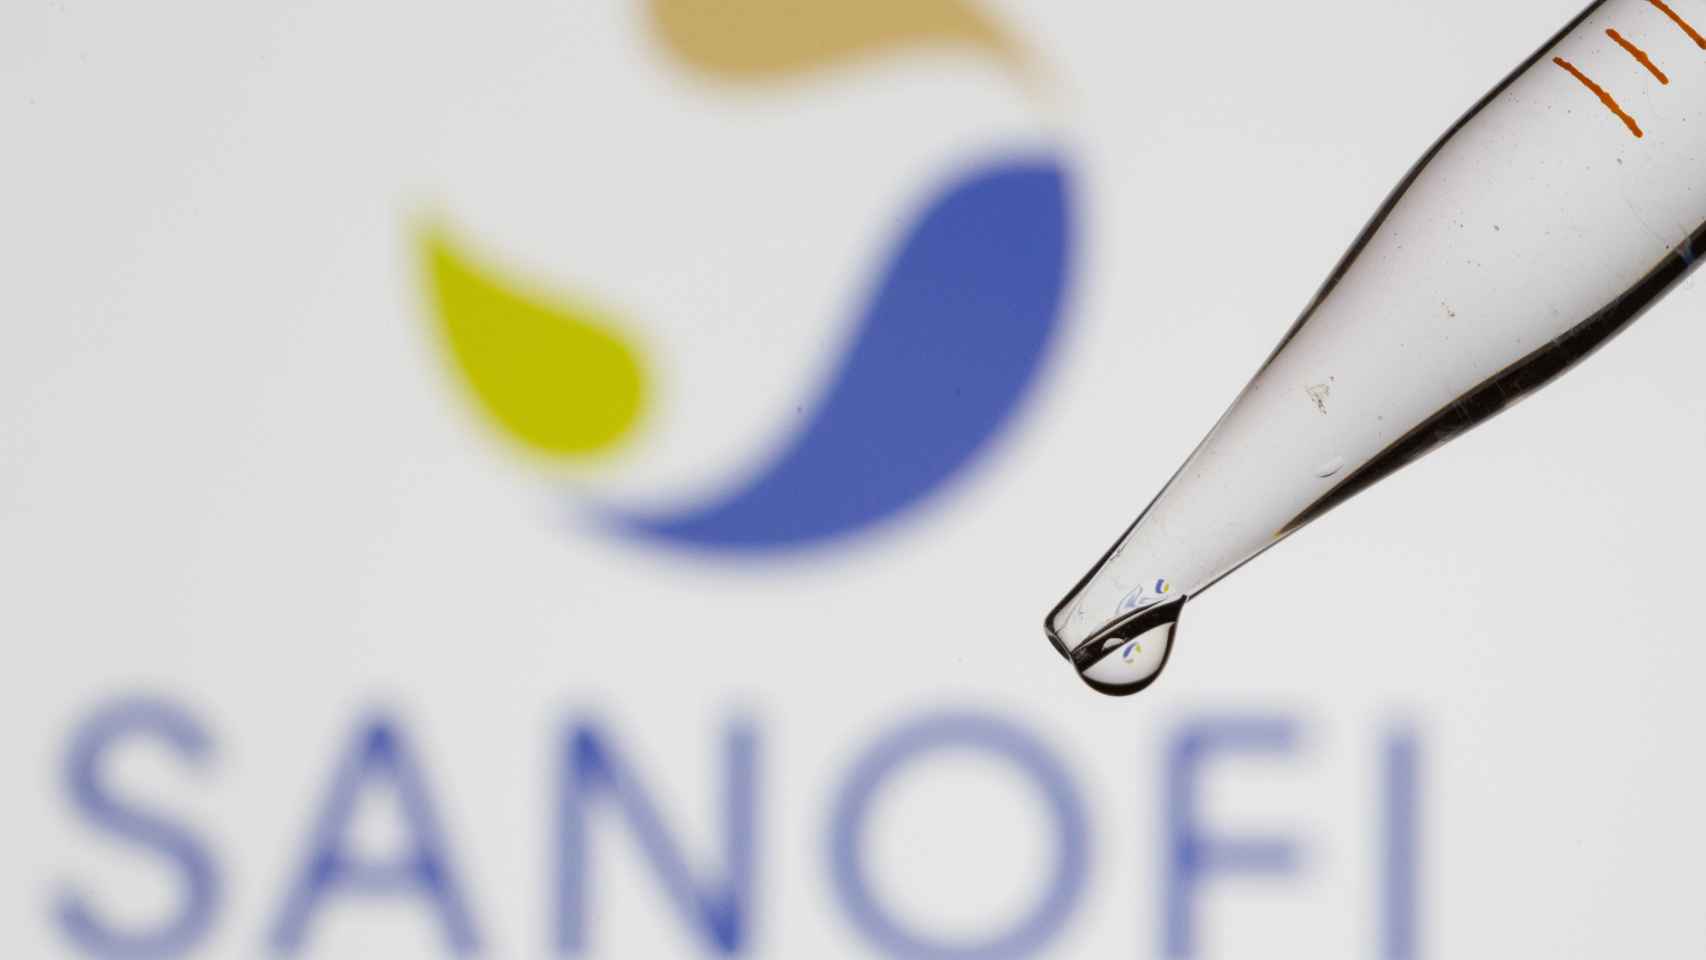 El logo de Sanofi.